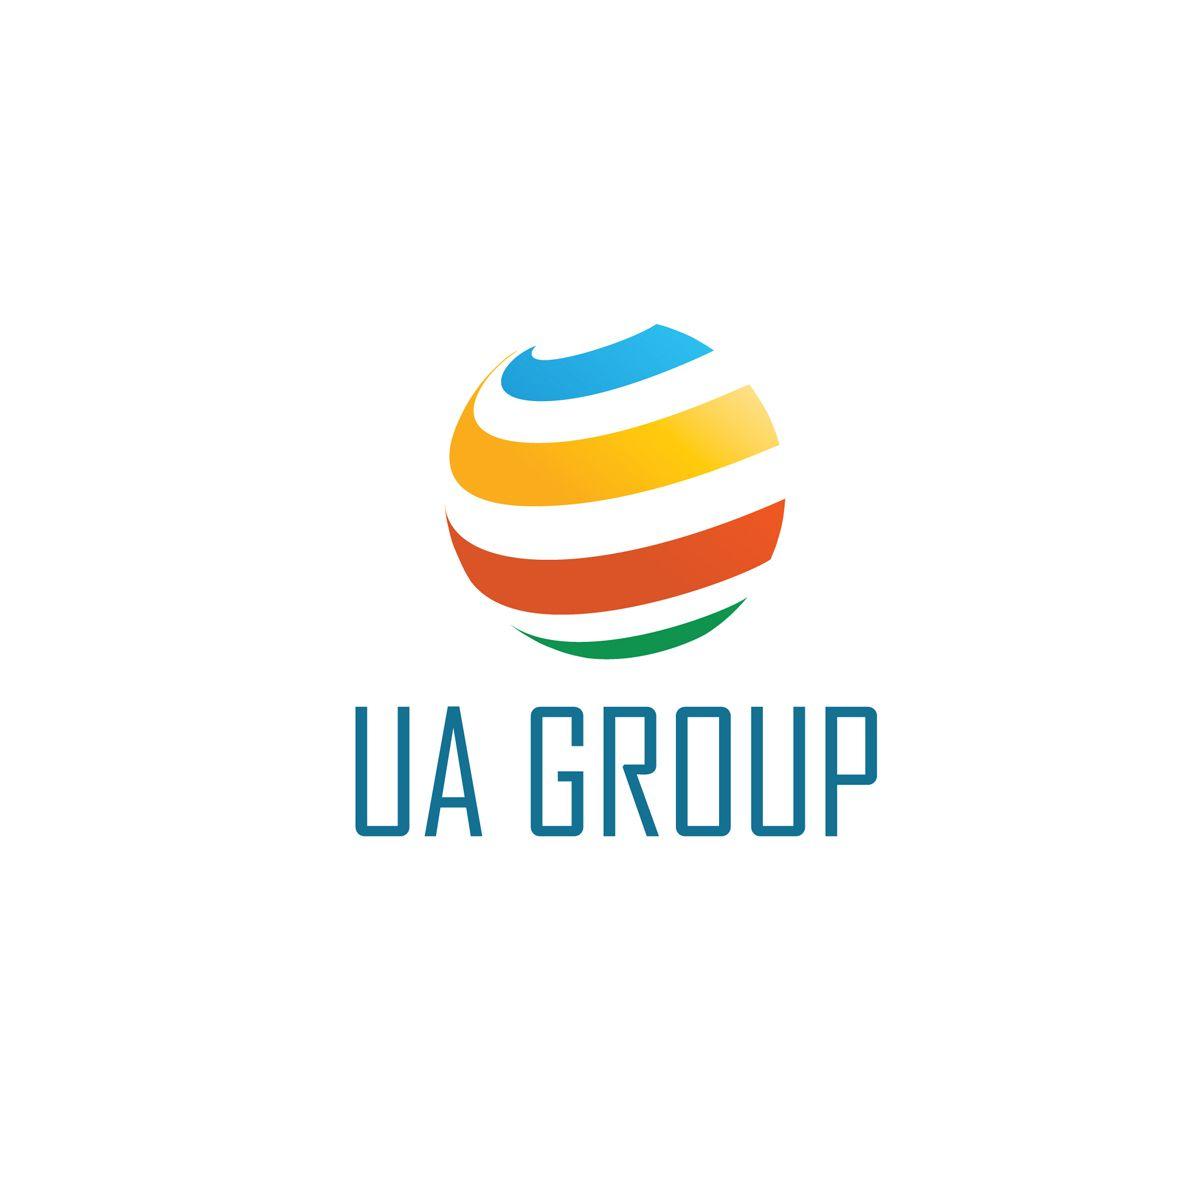 Colorful Globe Logo - Kele Wilson's Globe Logo Wins The UA Group Logo Design Contest